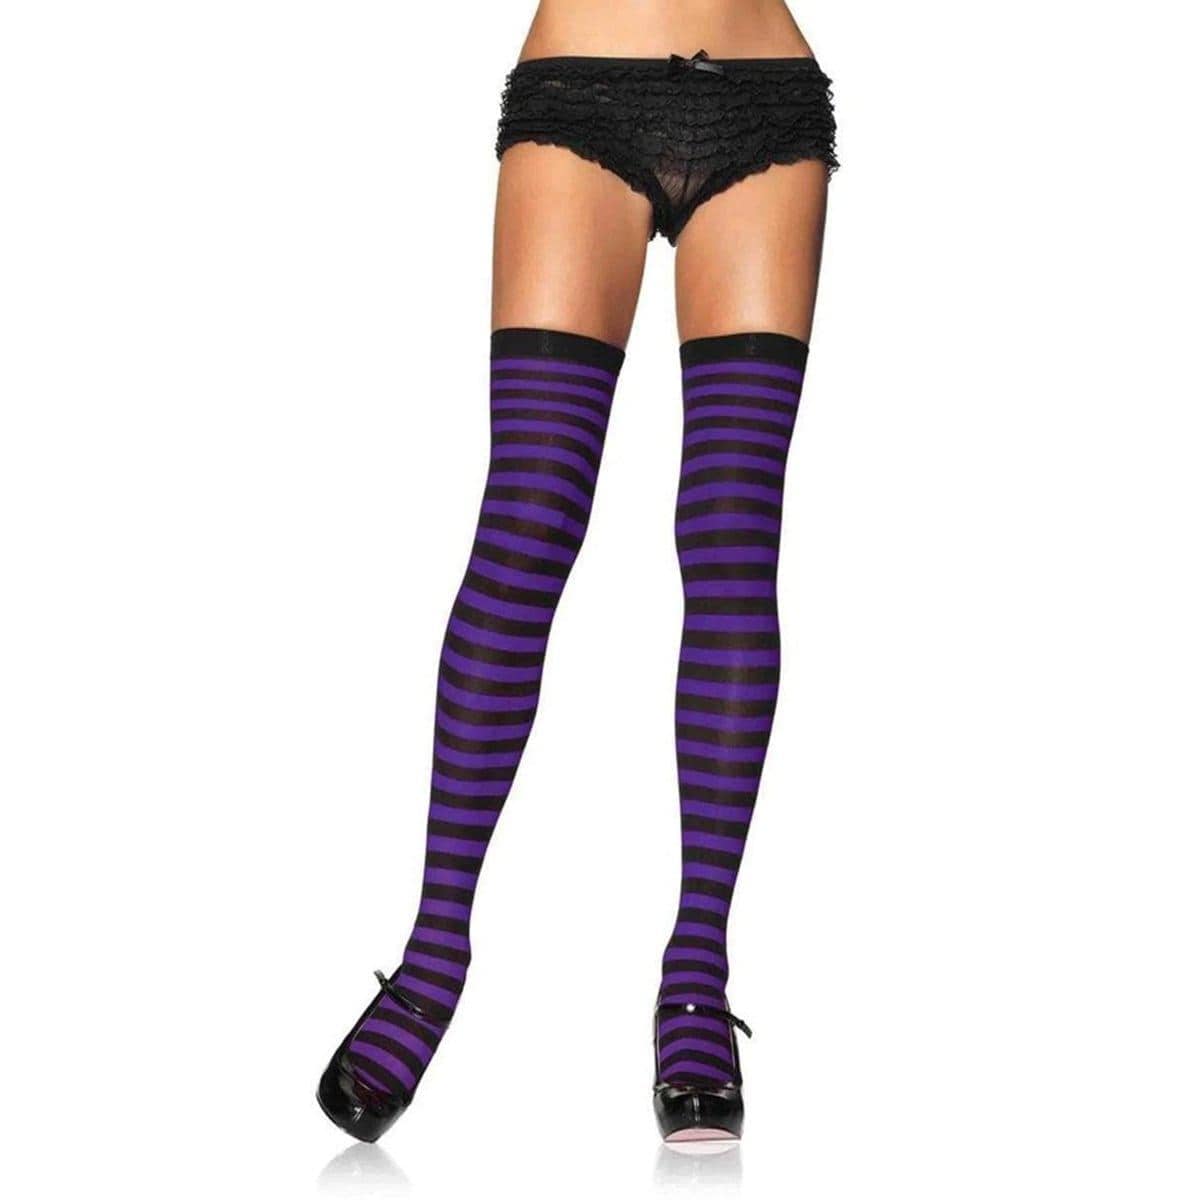 LEG AVENUE/SKU DISTRIBUTORS INC Costume Accessories Black & purple striped nylon thigh high socks for women